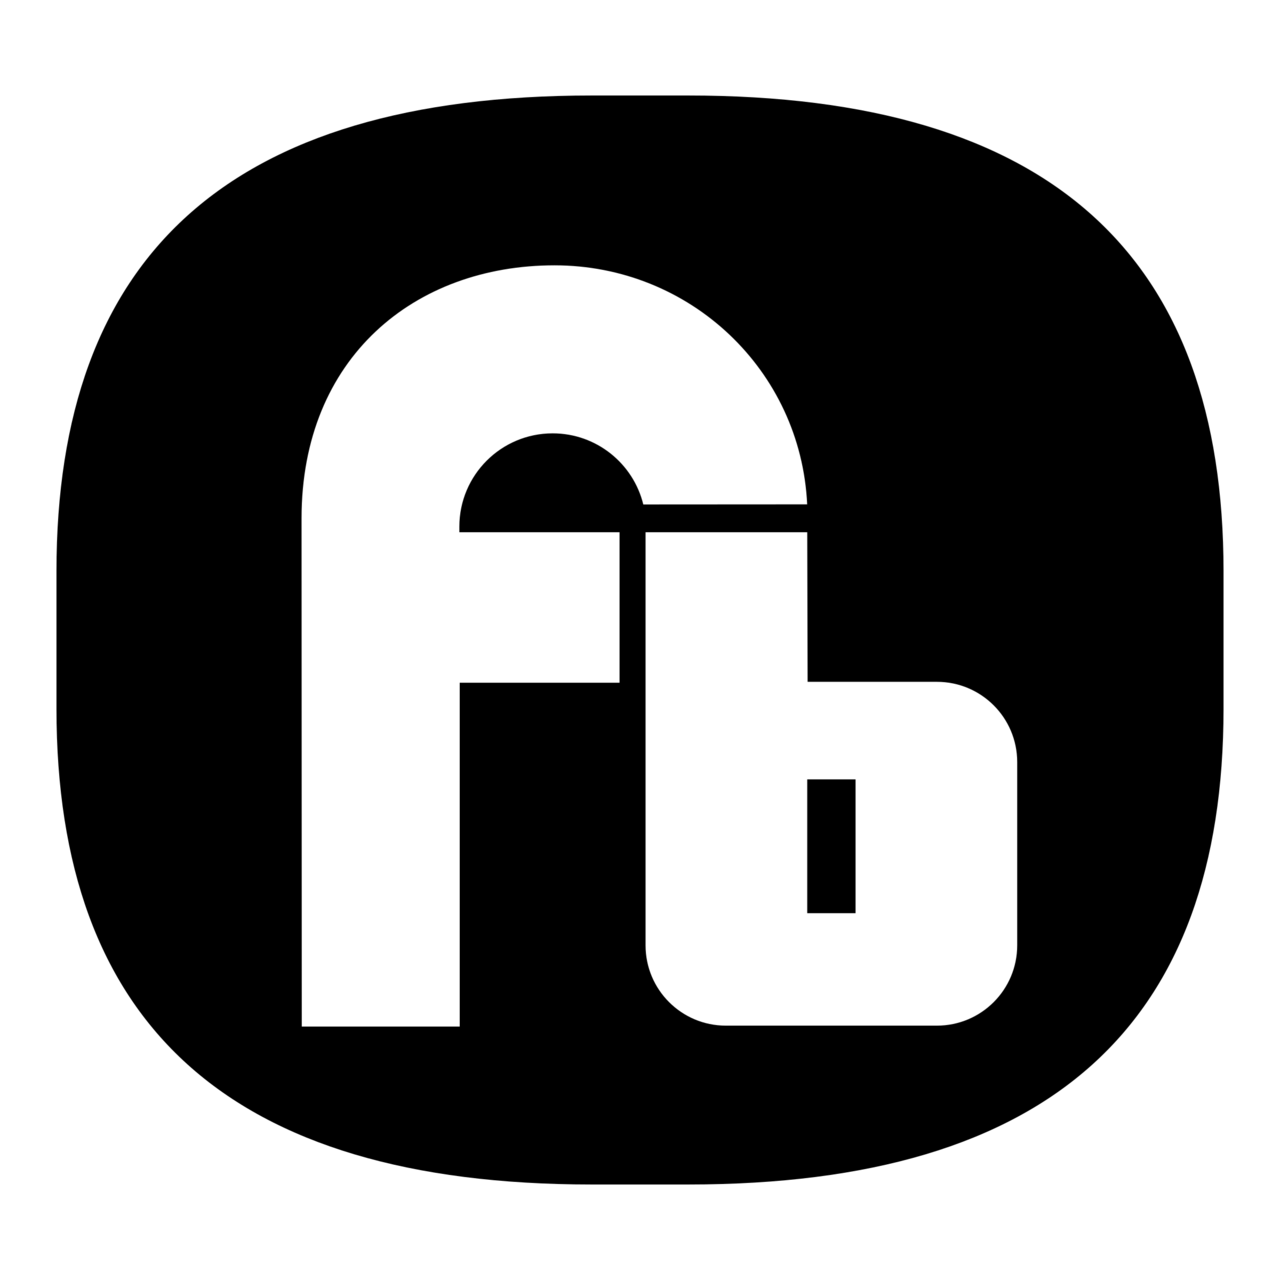 FB логотип белый PNG